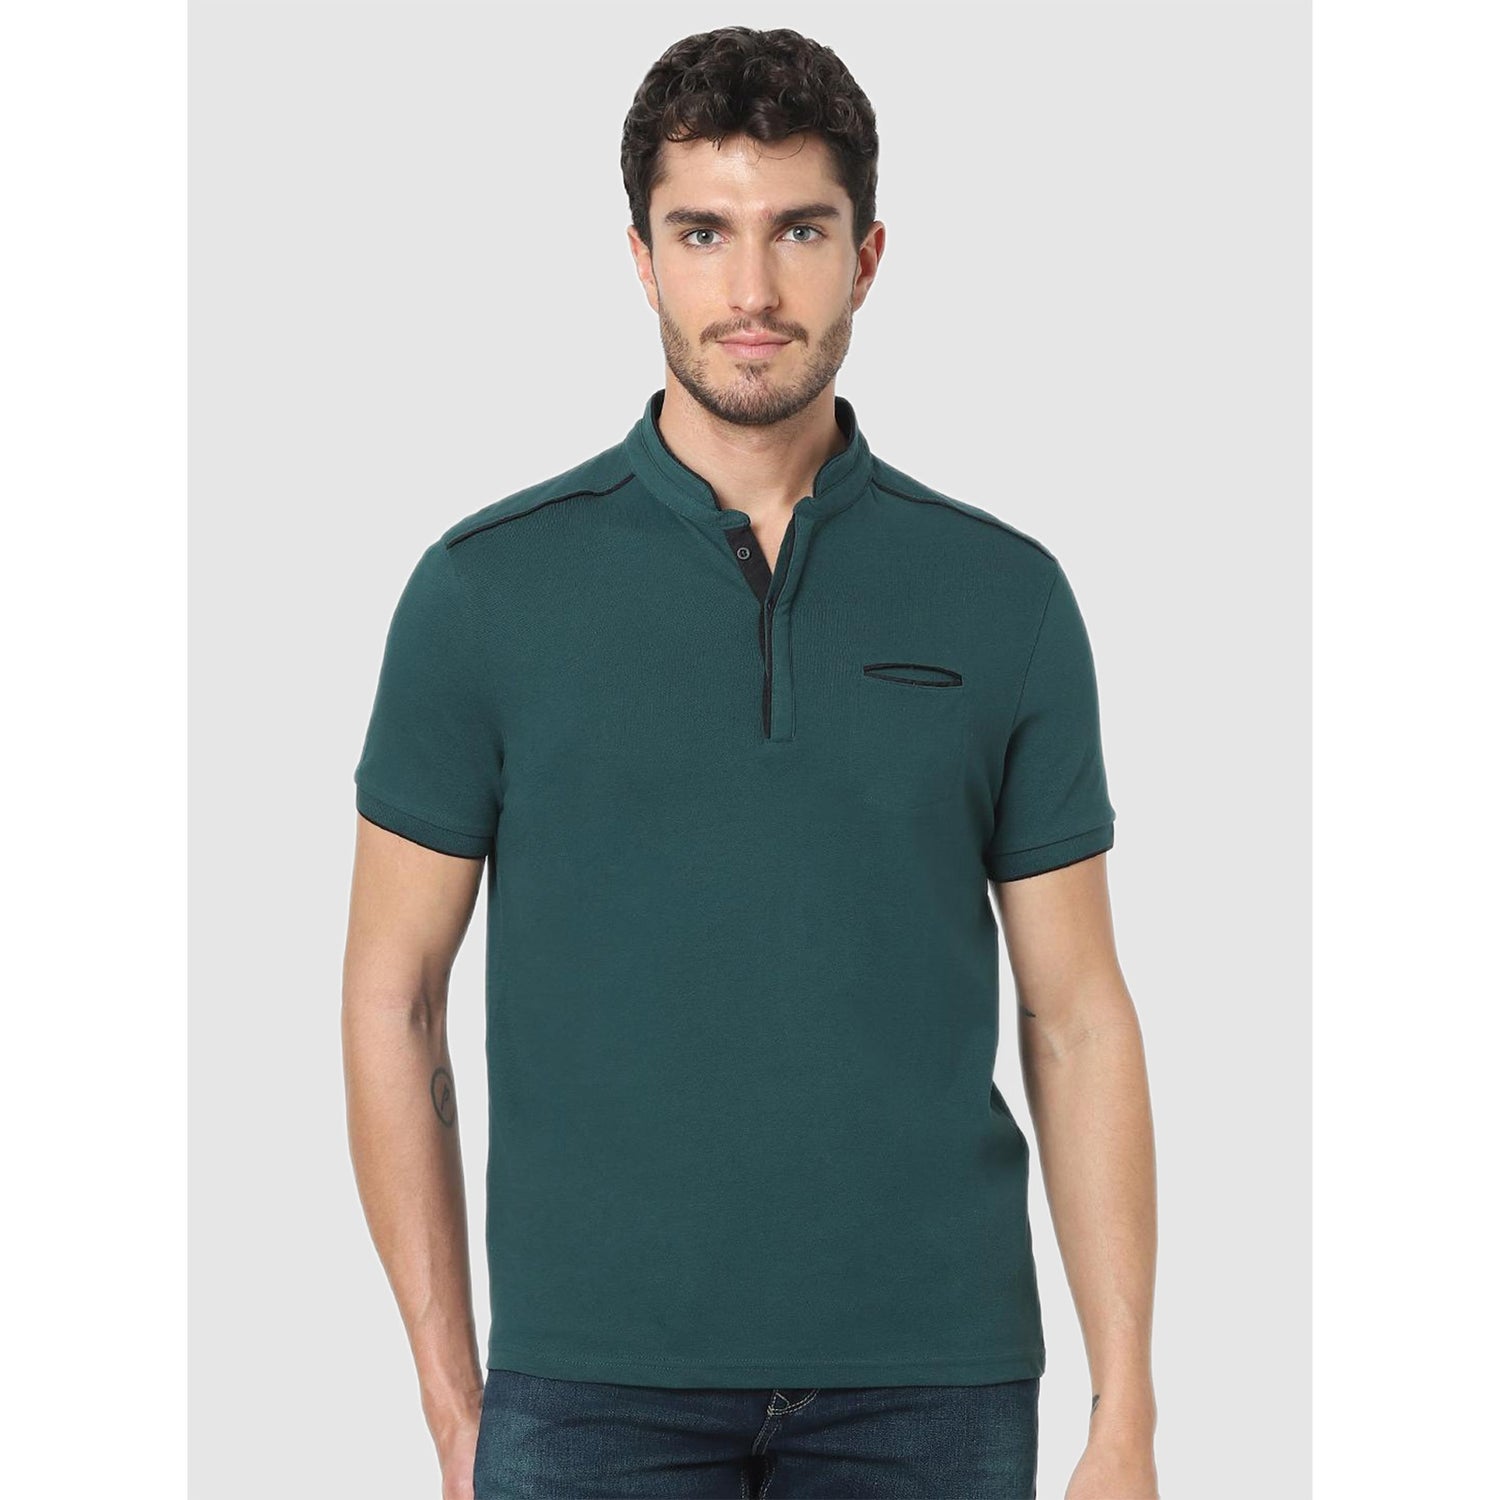 Men's Green Solid T-shirt (Various Sizes)